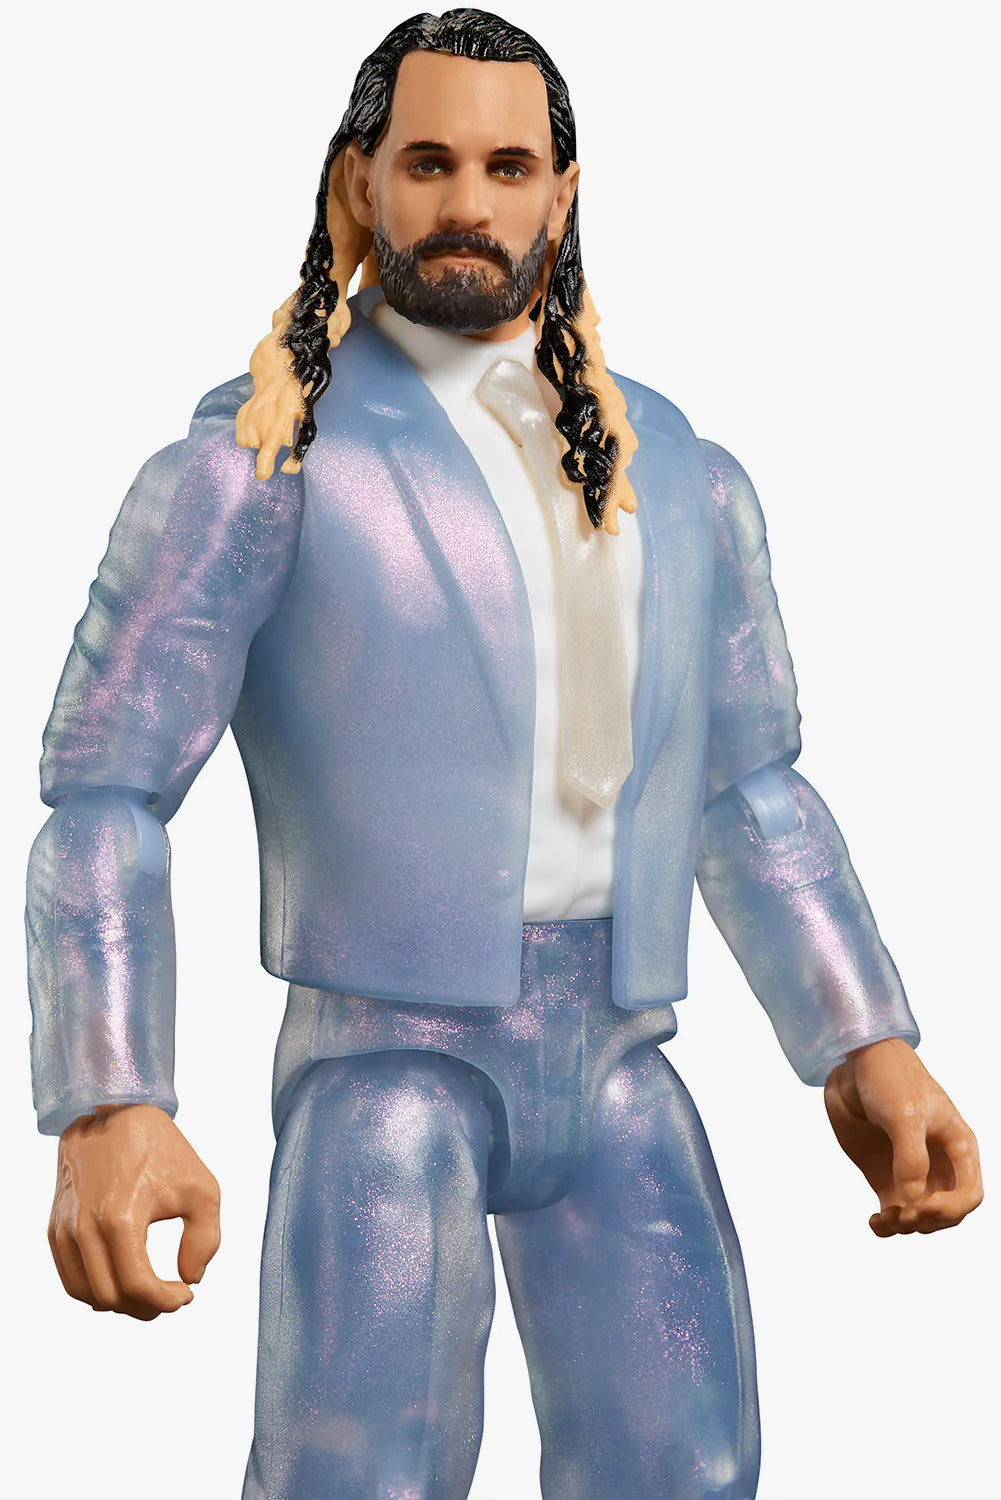 WWE Seth "Freakin" Rollins Basic Figure Series 141